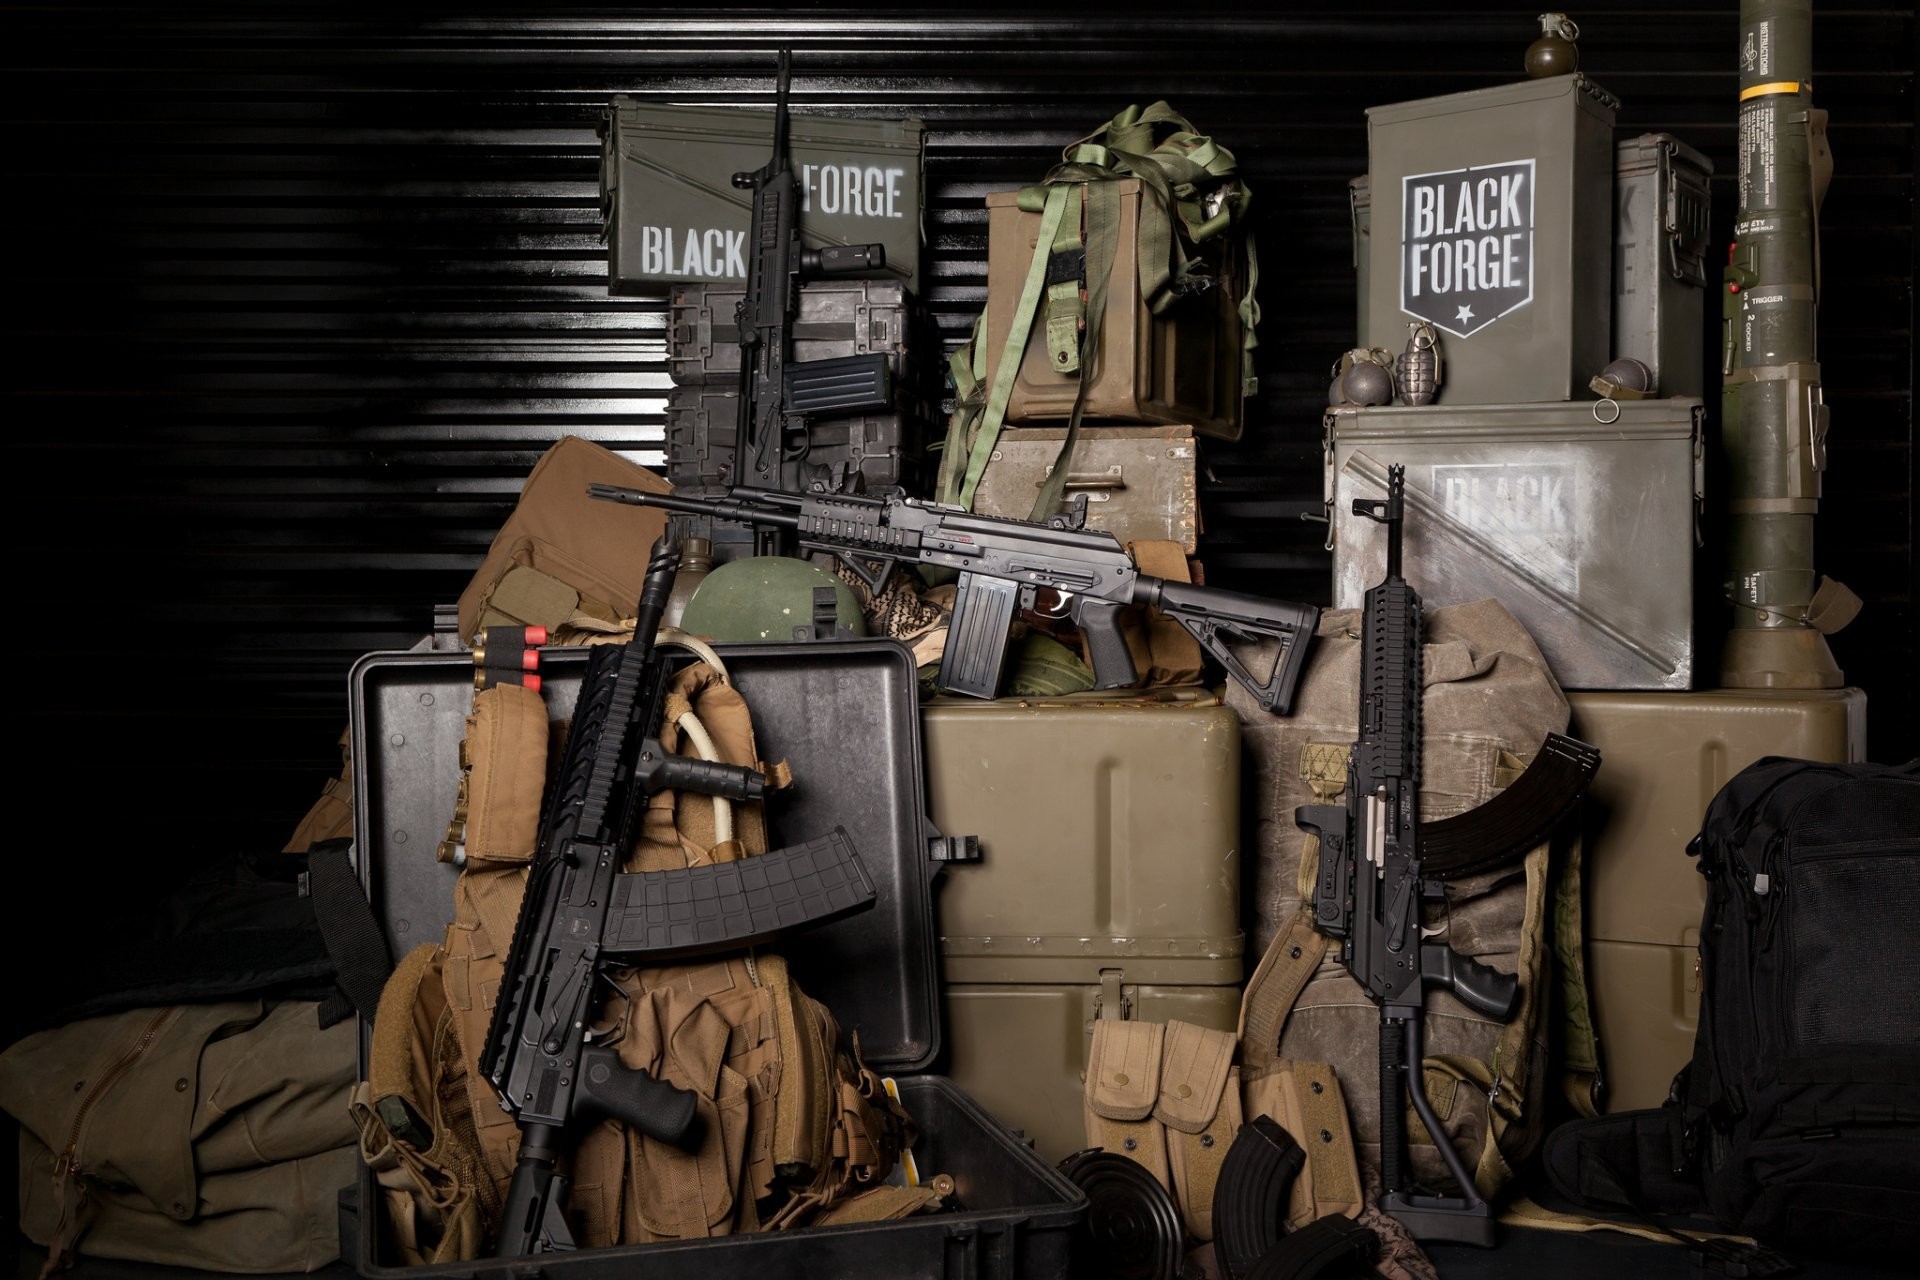 1920x1280 machines boar assault rifles weapon grenade shops boxes handbags equipment  military ammunition